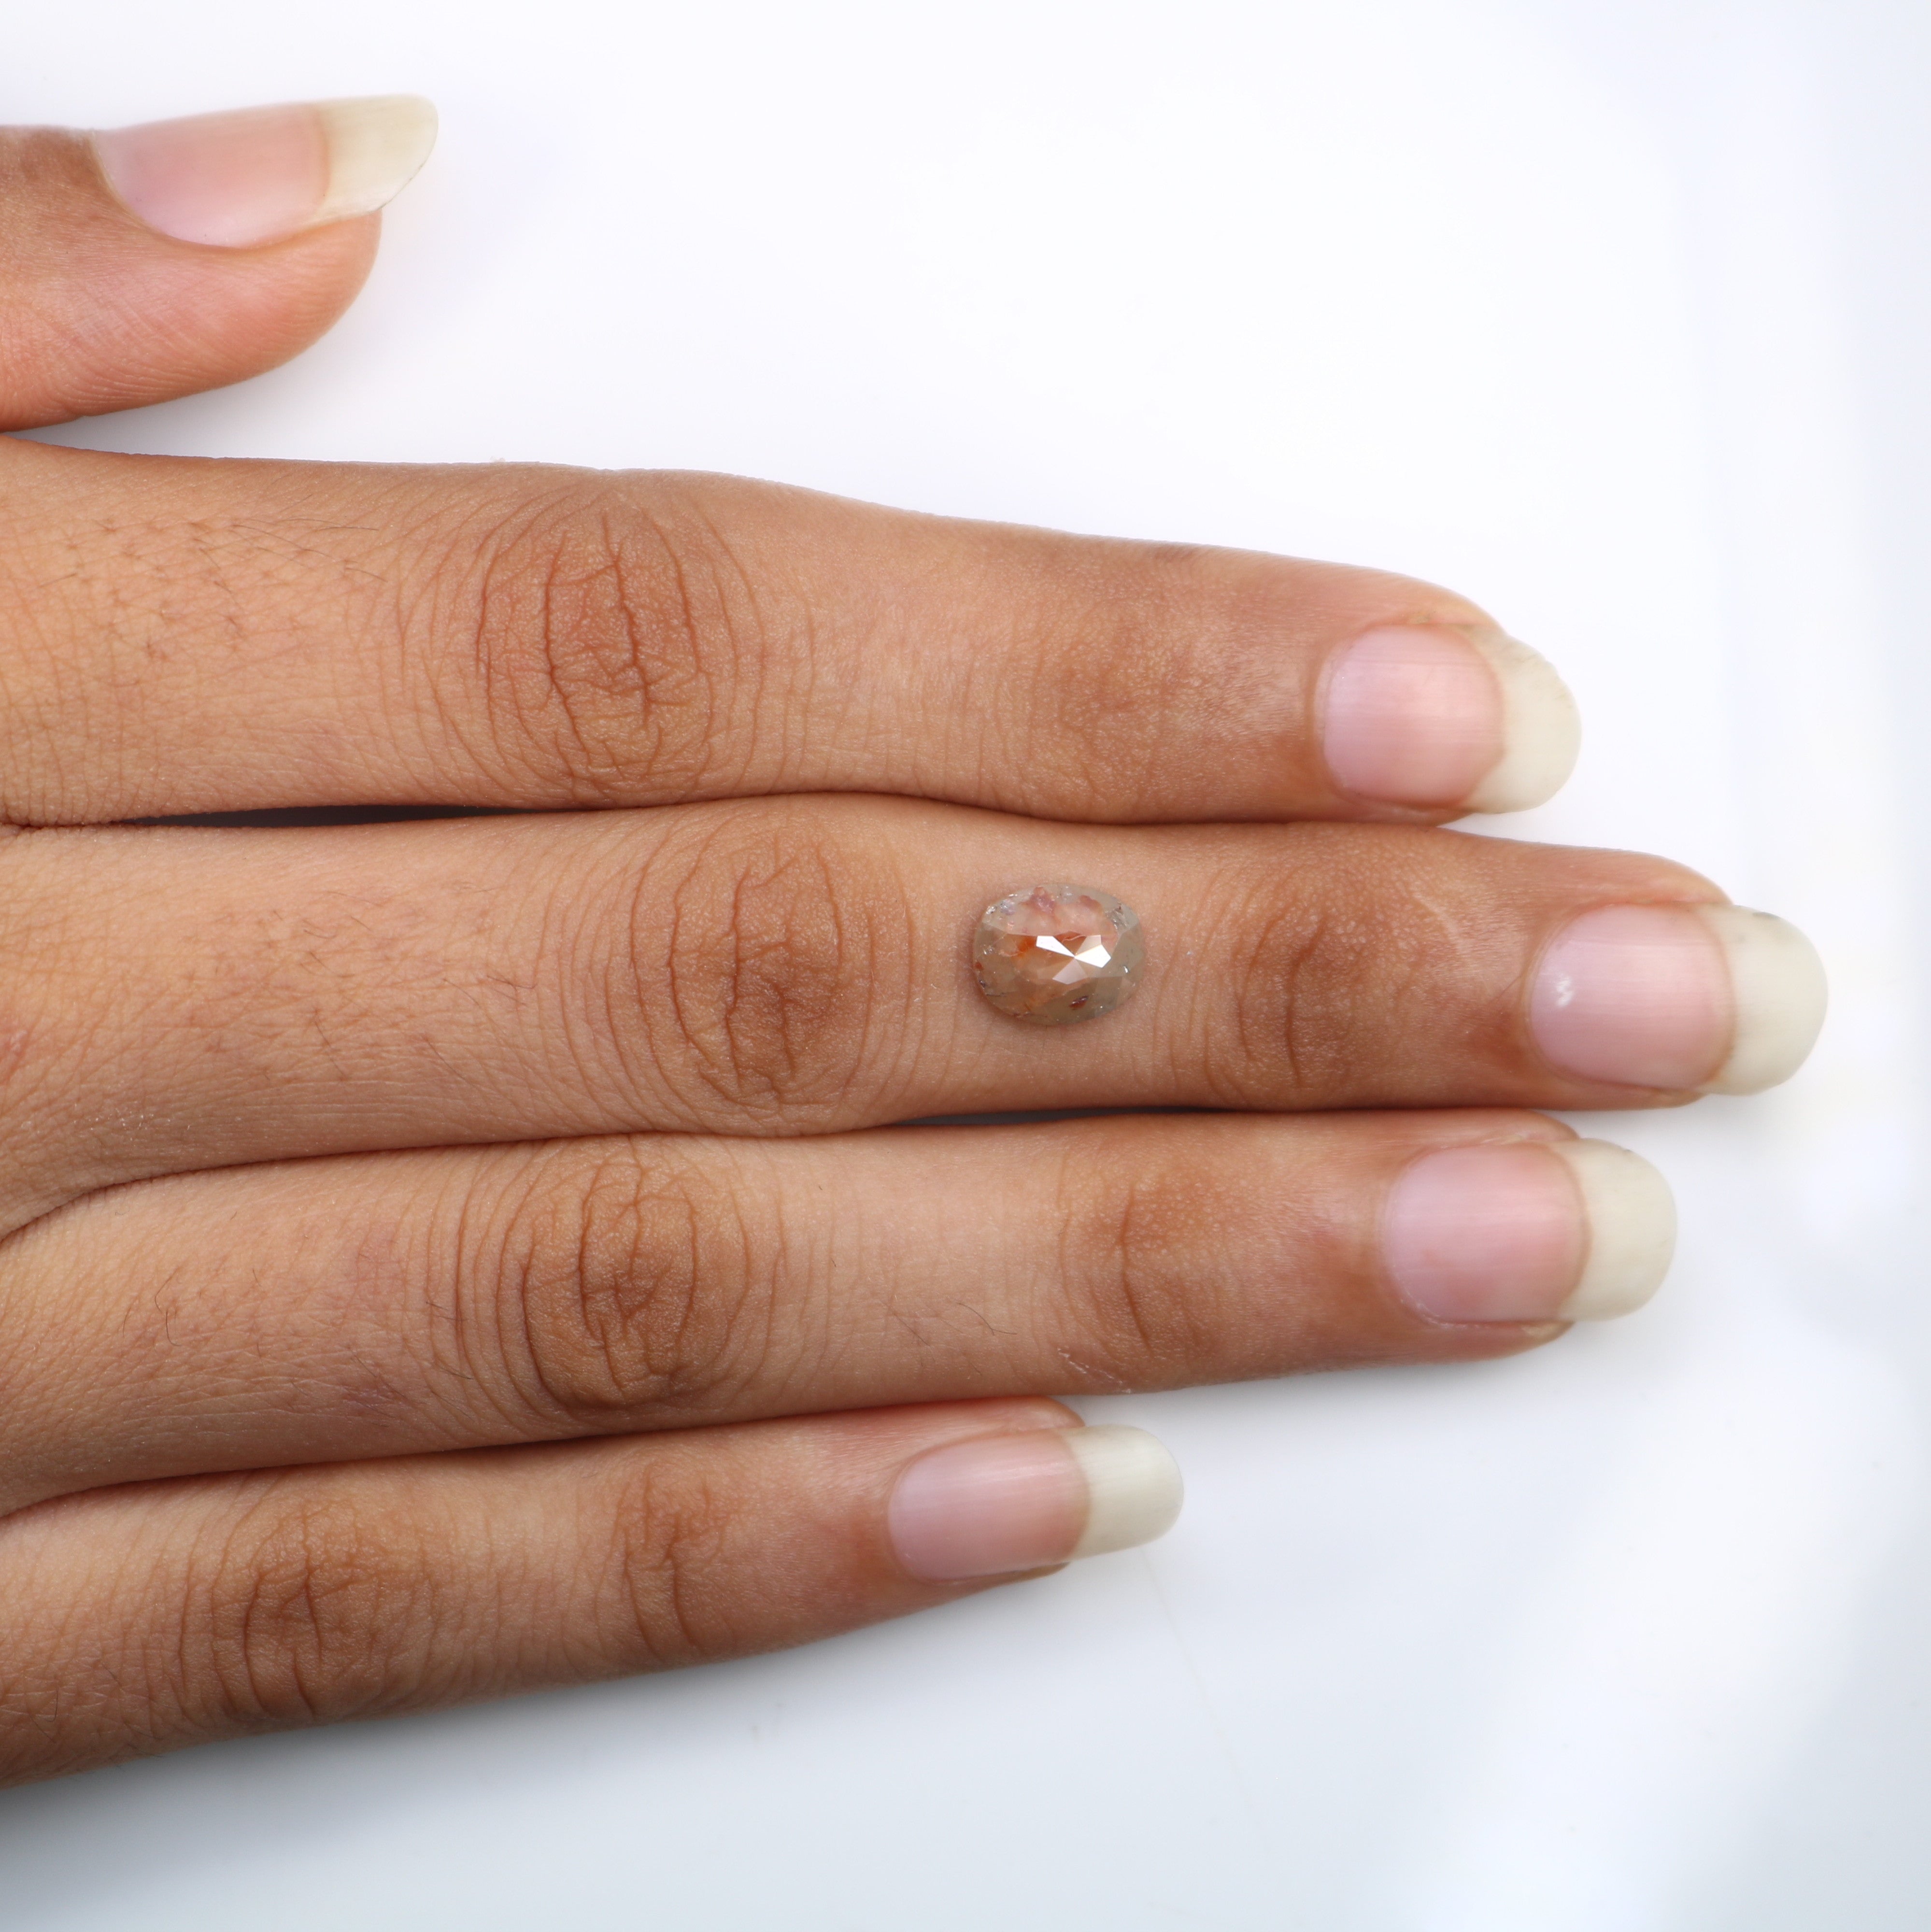 1.48 Carat Oval Shaped Diamond Ring Natural Loose Fancy Peach Color Diamond